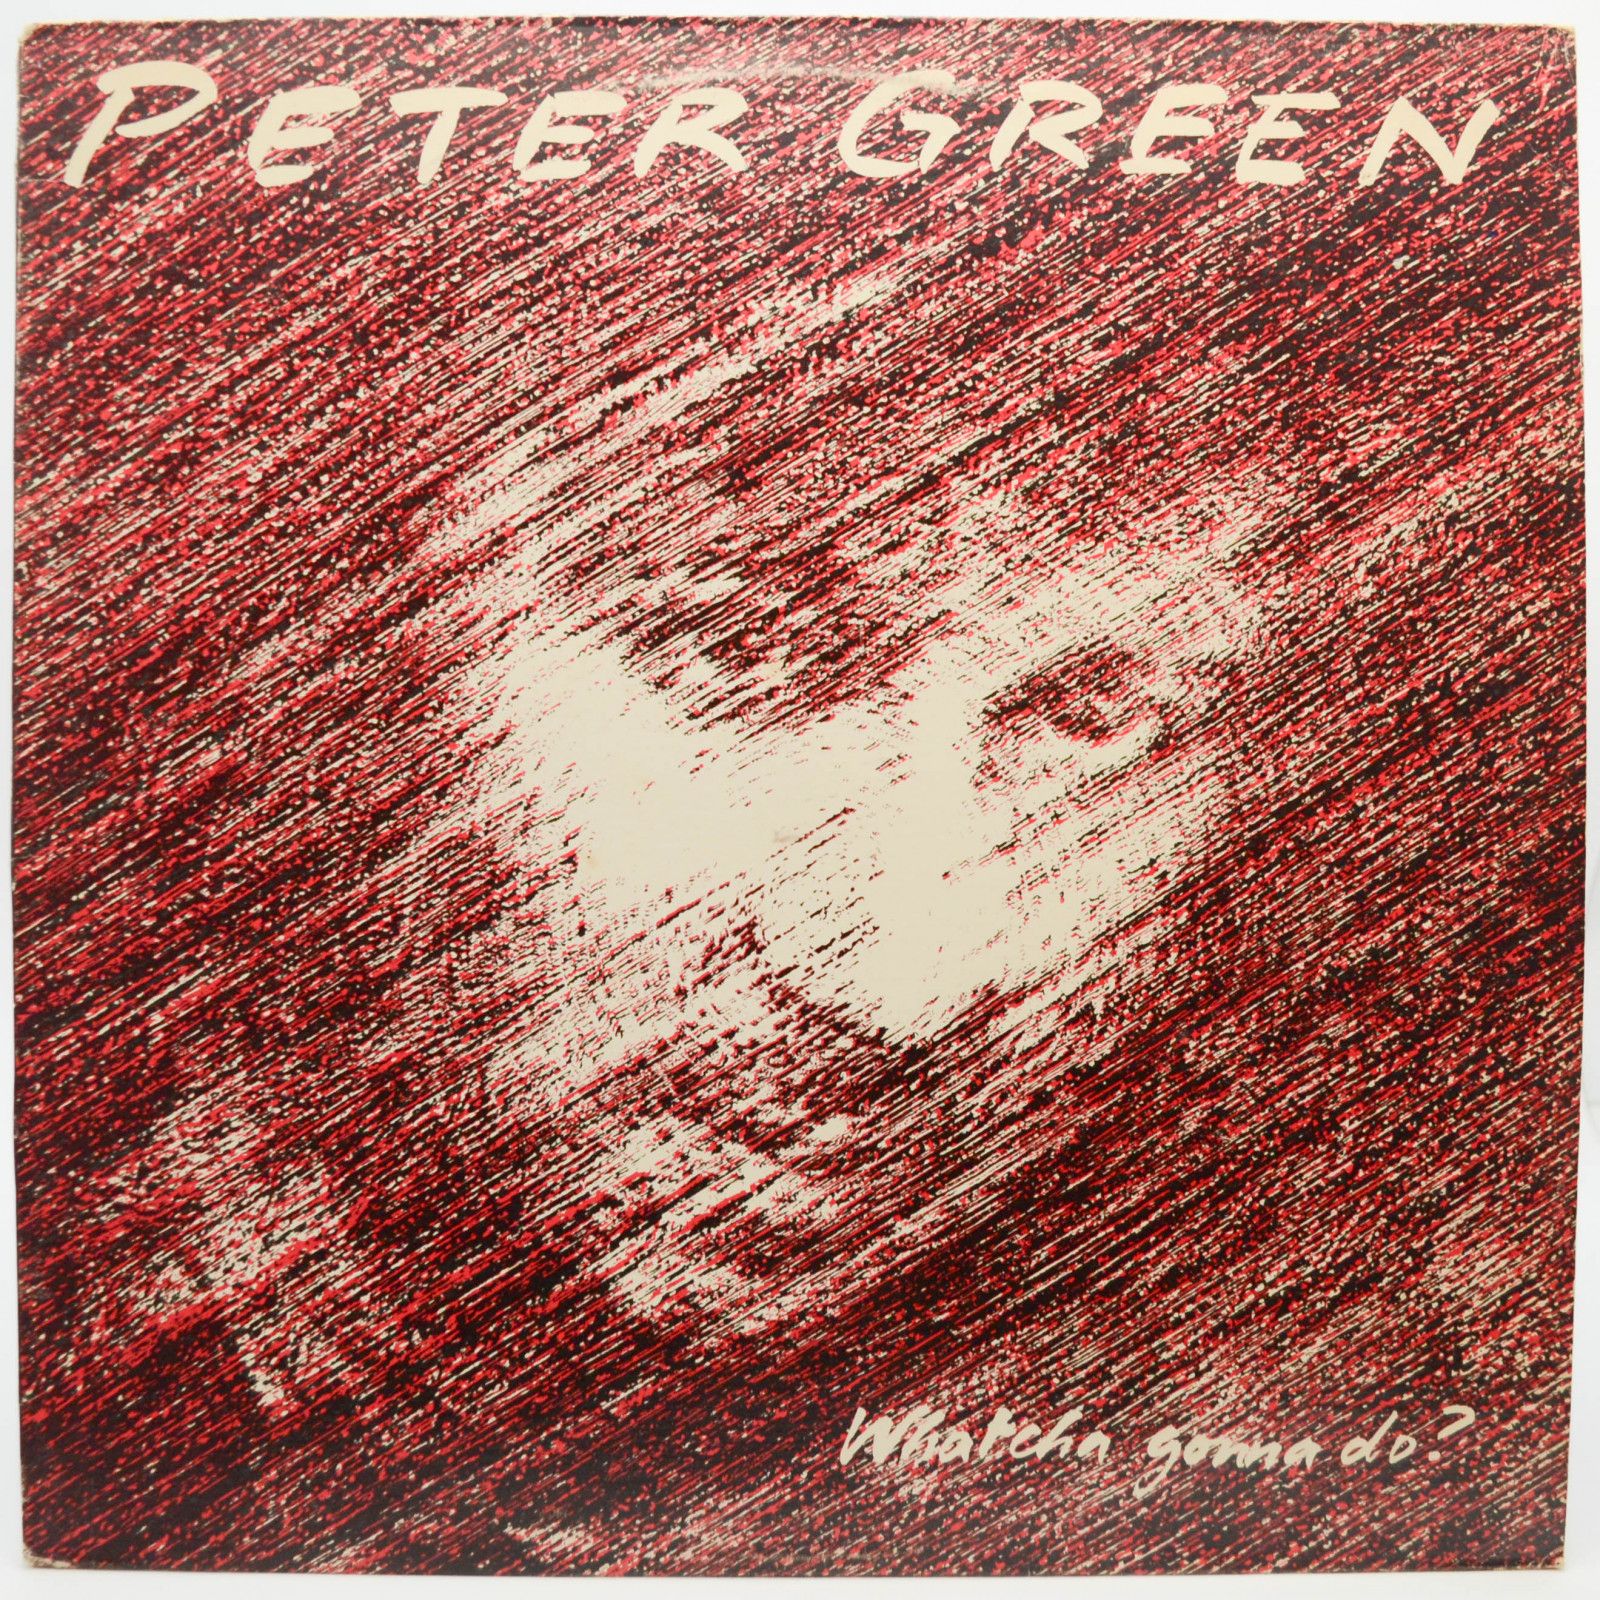 Peter Green — Whatcha Gonna Do? (UK), 1981